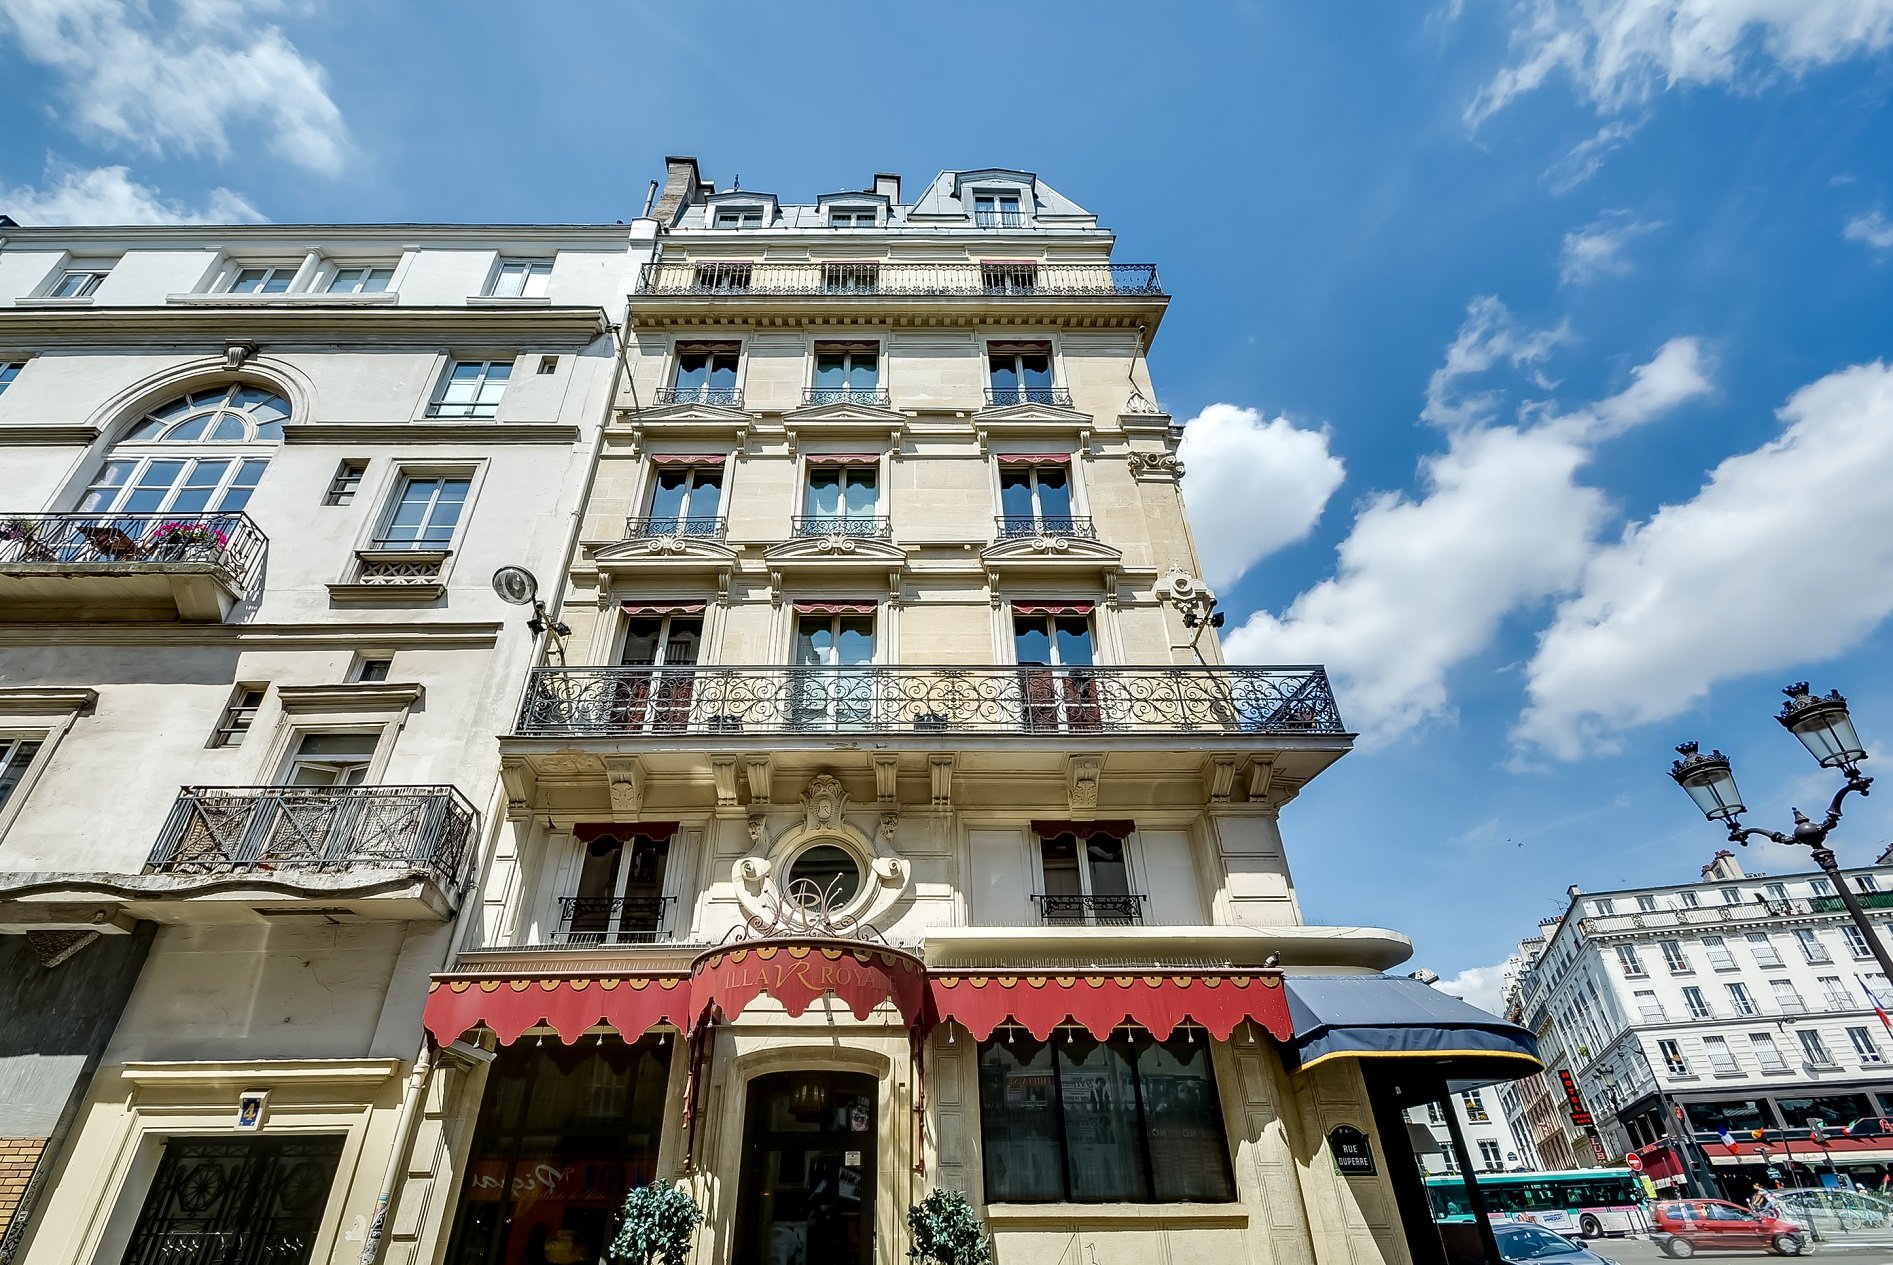 49/facade/Hotel - 4 star - Montmartre.jpg